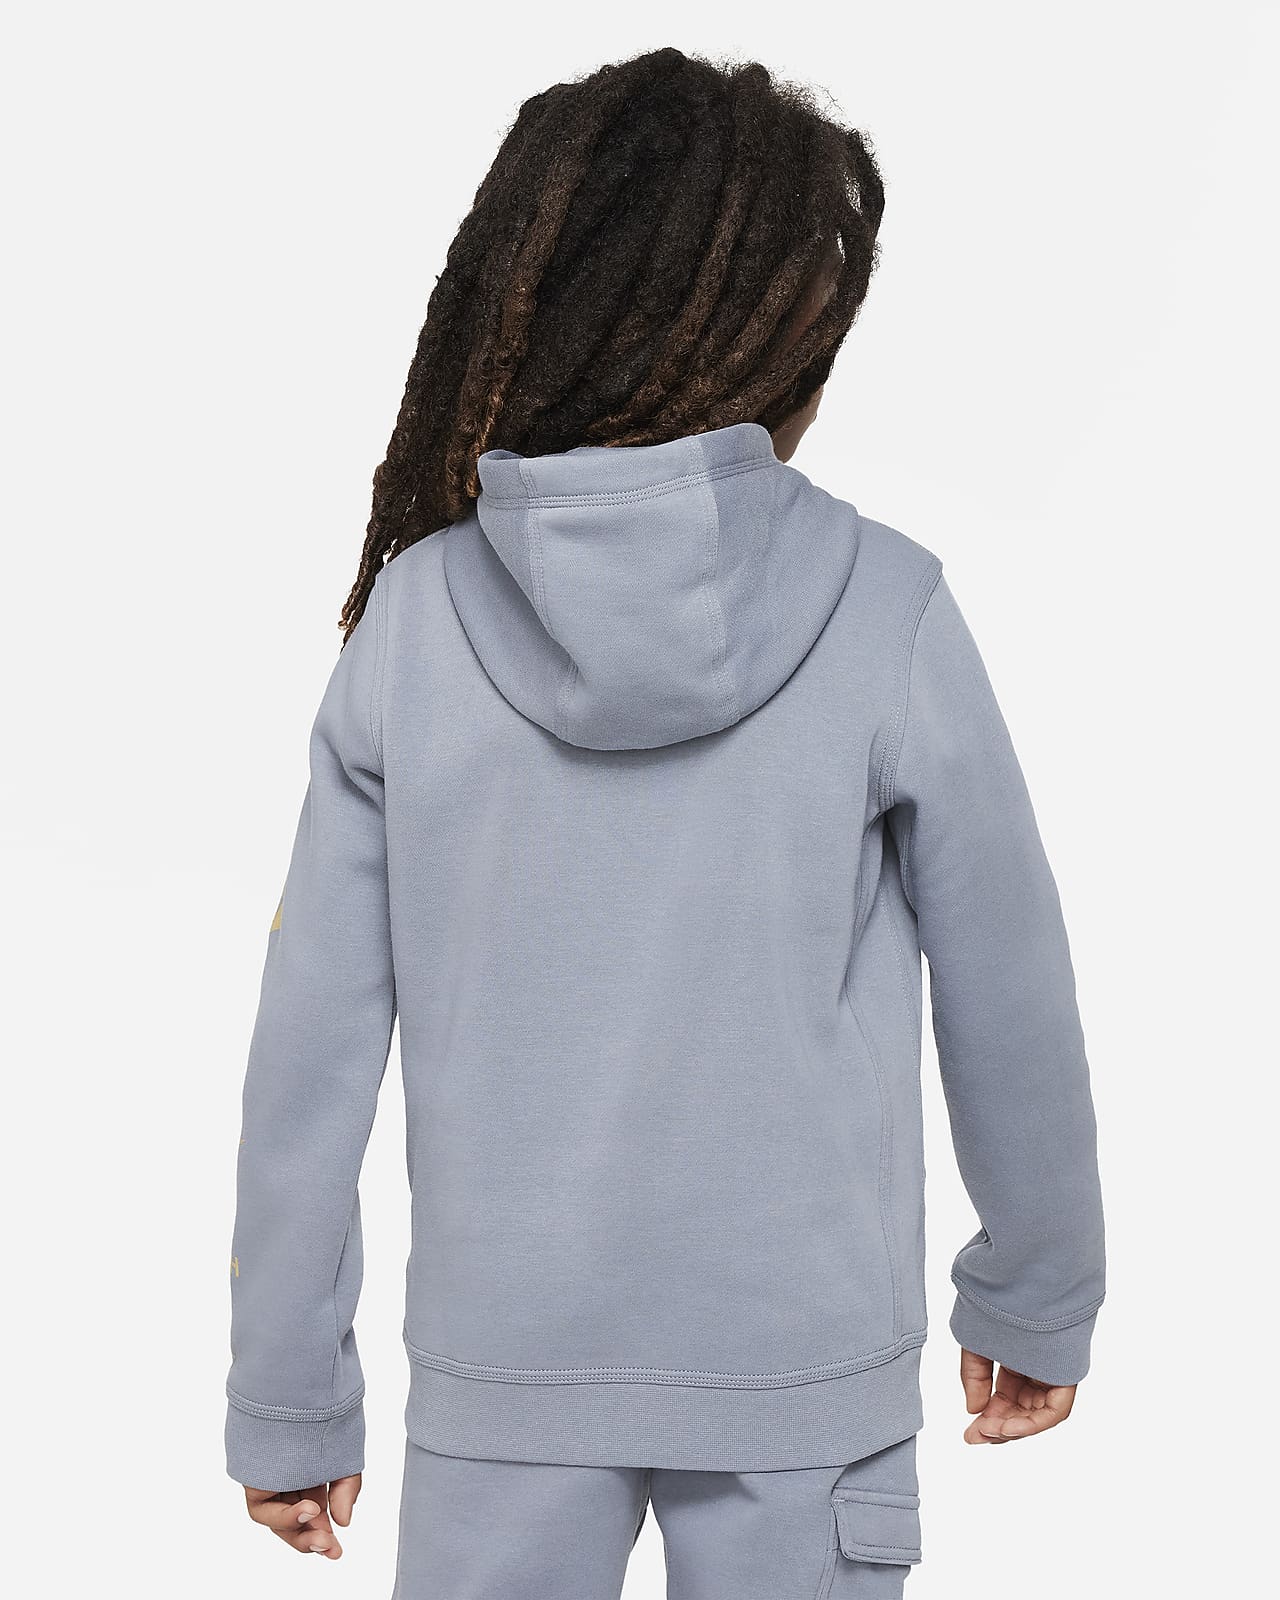 Kinder. AT Nike Standard Issue Sportswear Nike Fleece-Hoodie für ältere